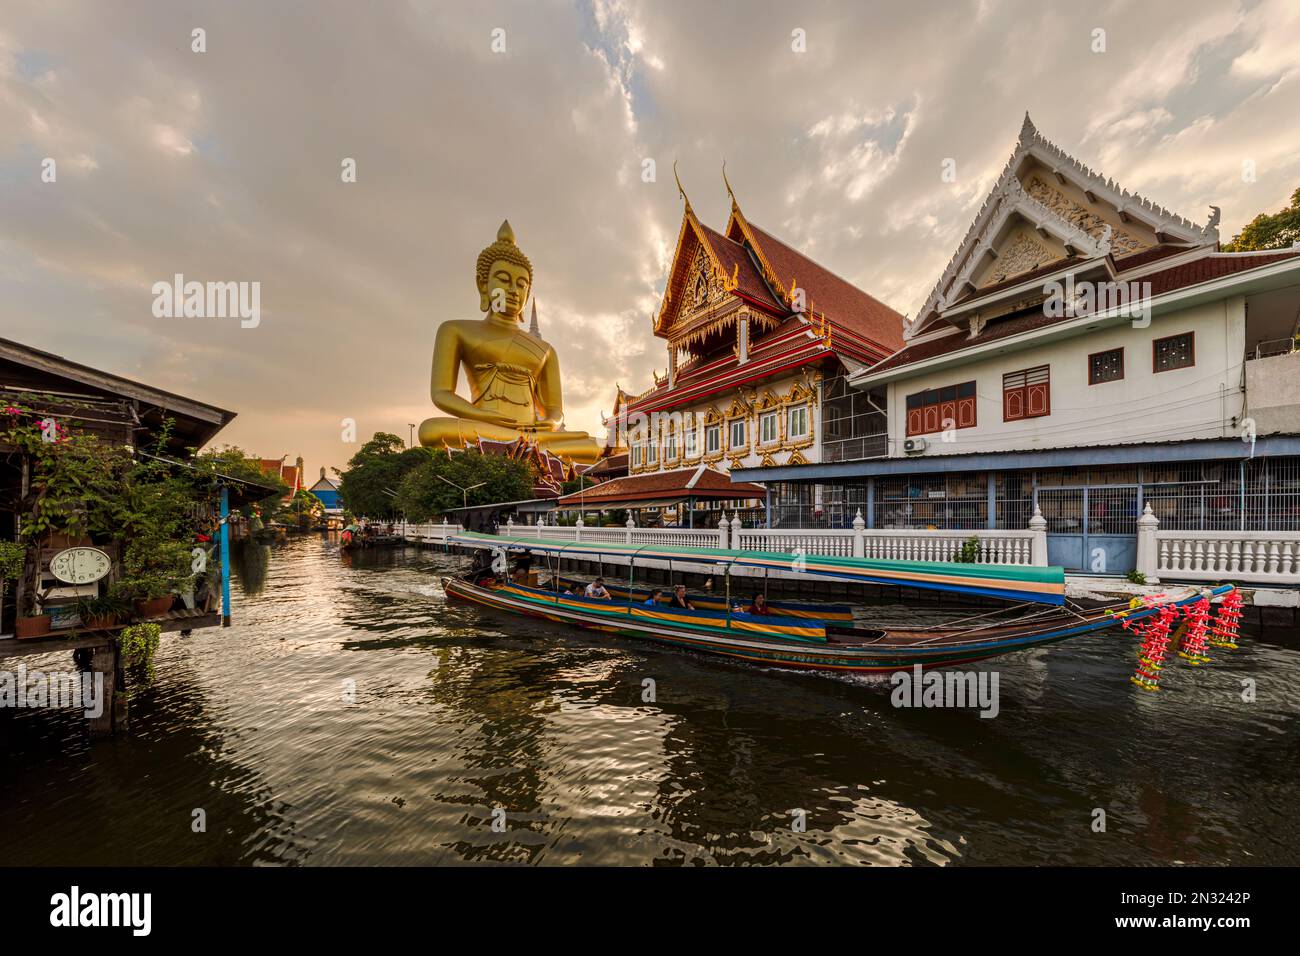 A boat was passing Big Buddha statue (Phra Buddha Dhammakaya Thepmongkhon ) in Wat Pak Nam Phasi Charoen temple located by the river during sunset. Stock Photo